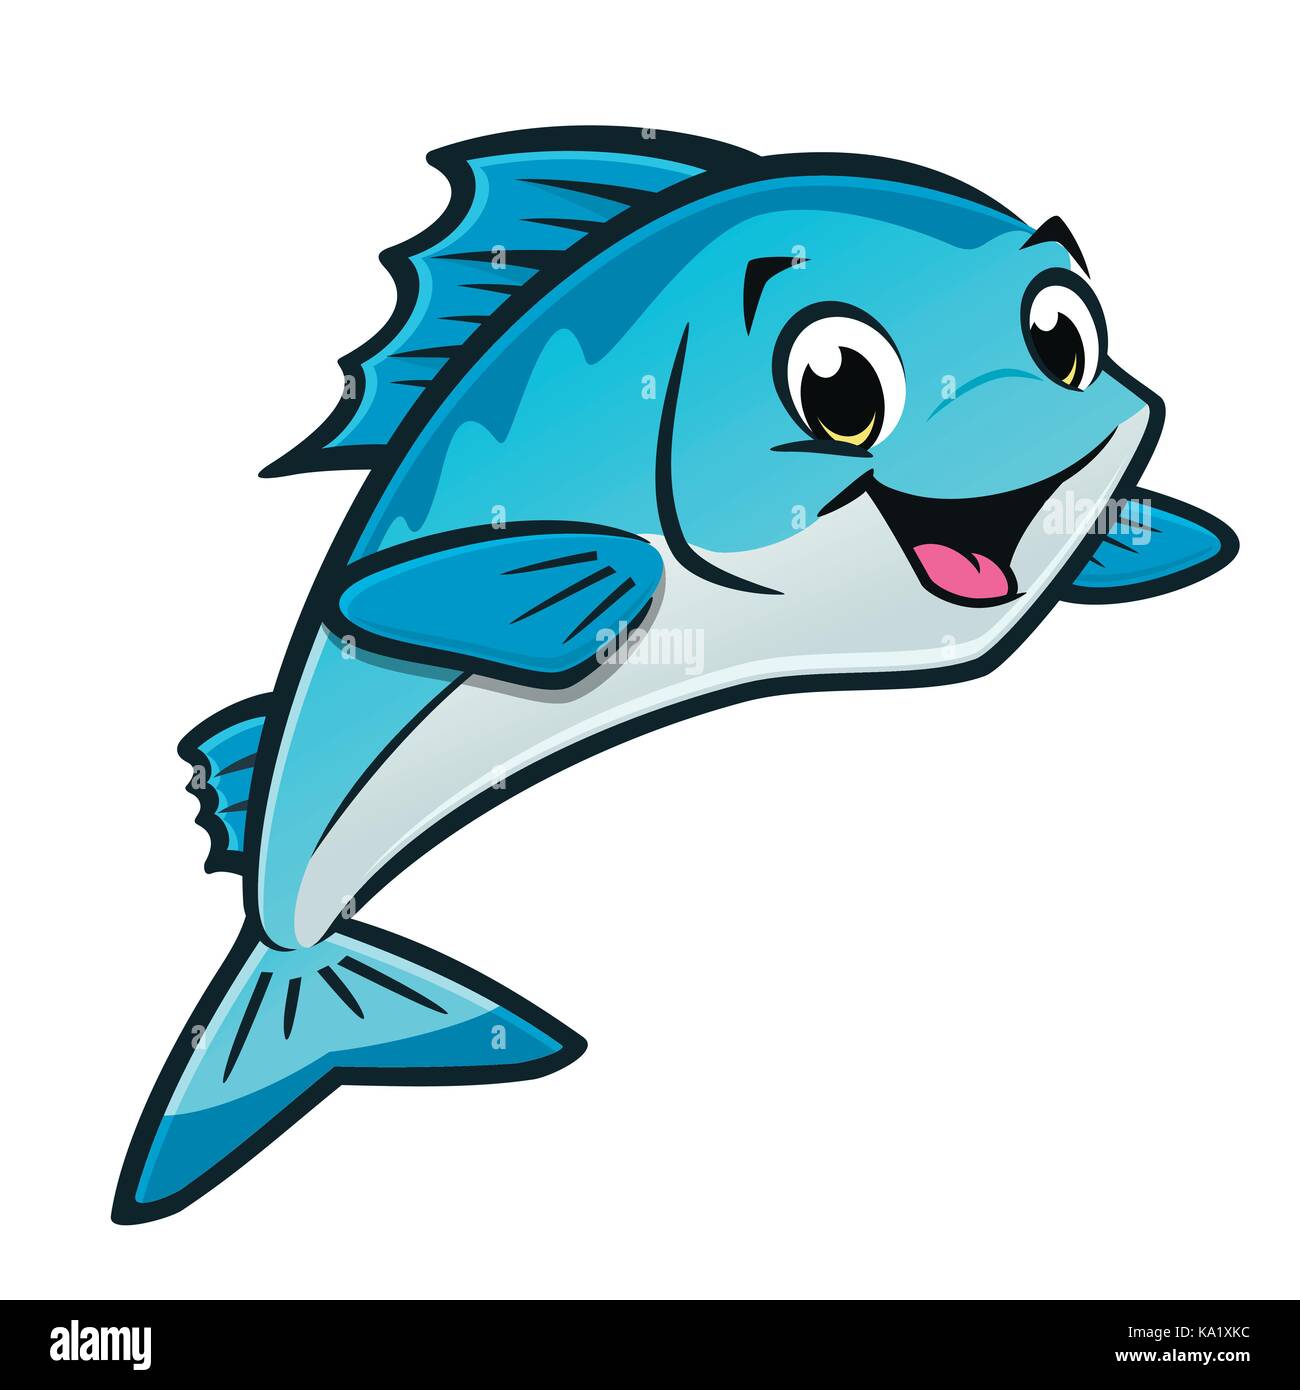 dibujos animados de peces Imagen Vector de stock - Alamy